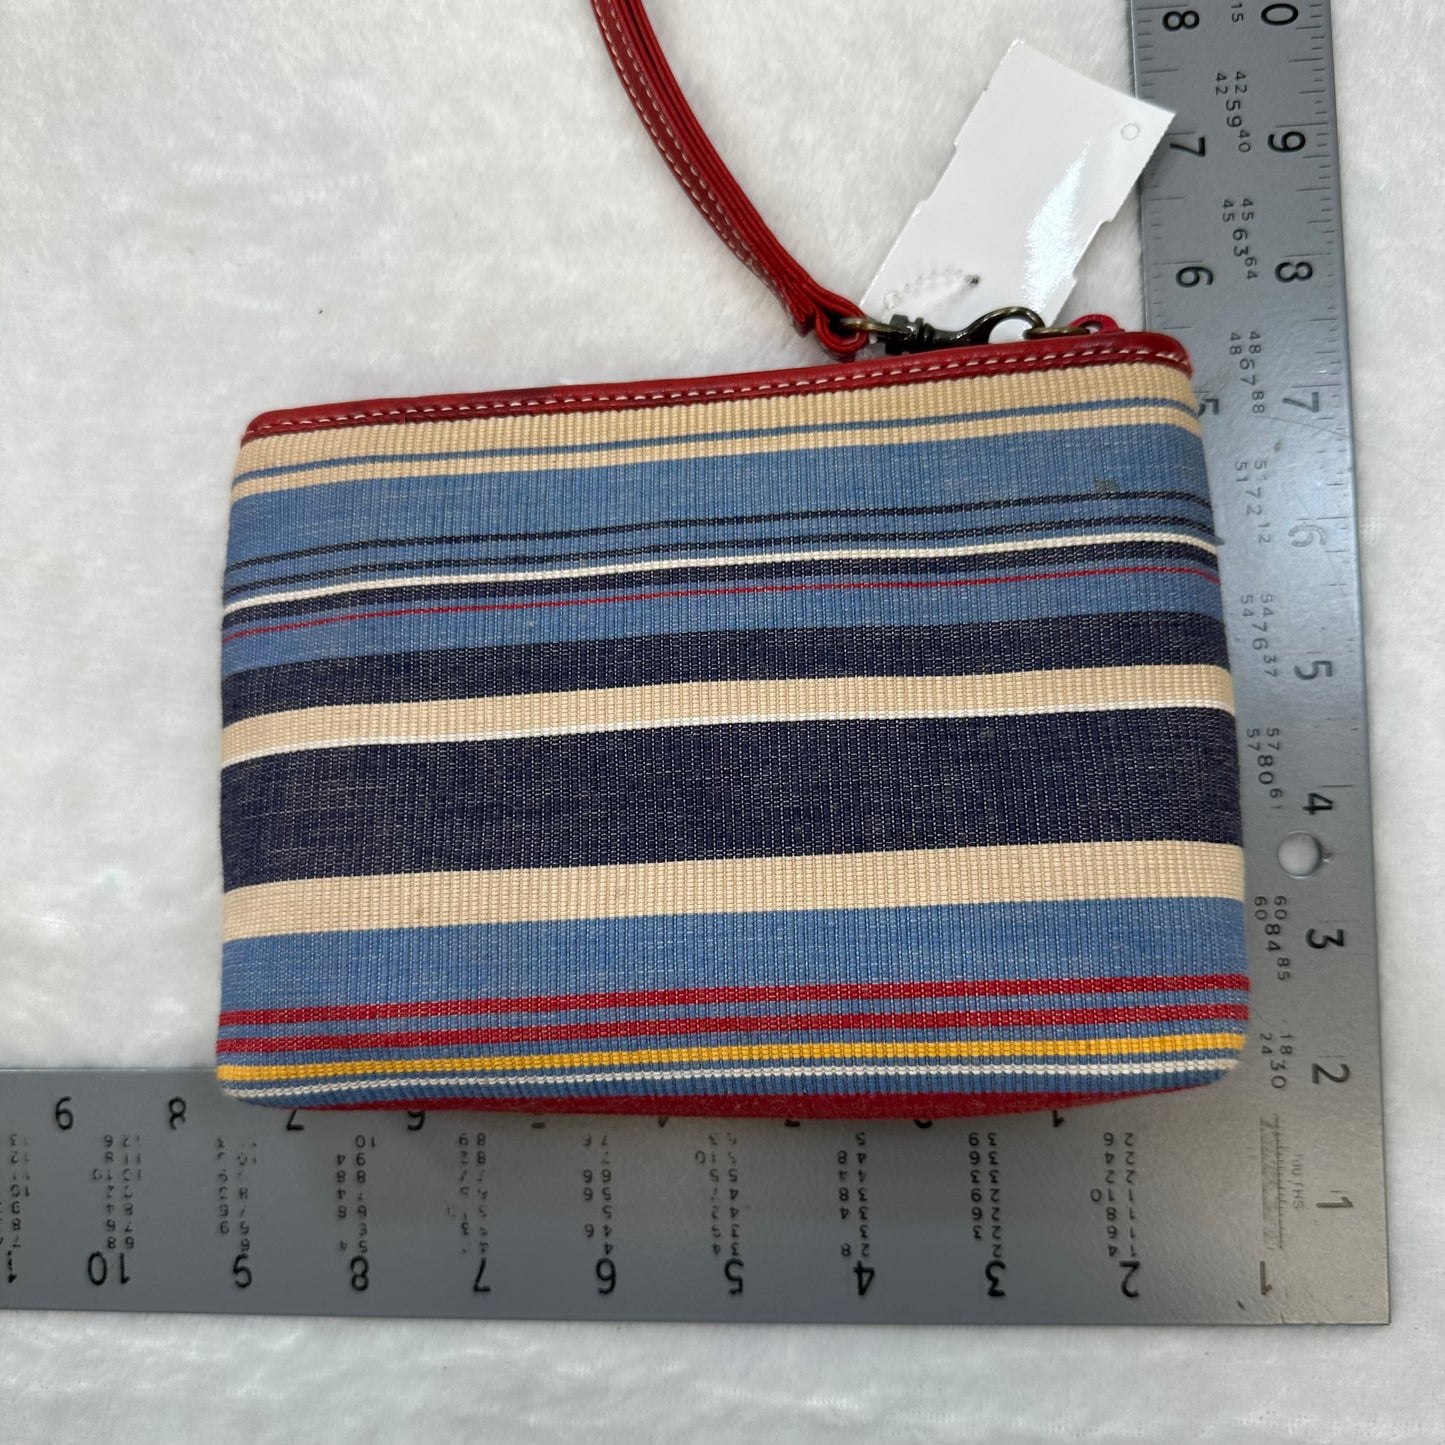 Handbag Designer By Isabella Fiore  Size: Small